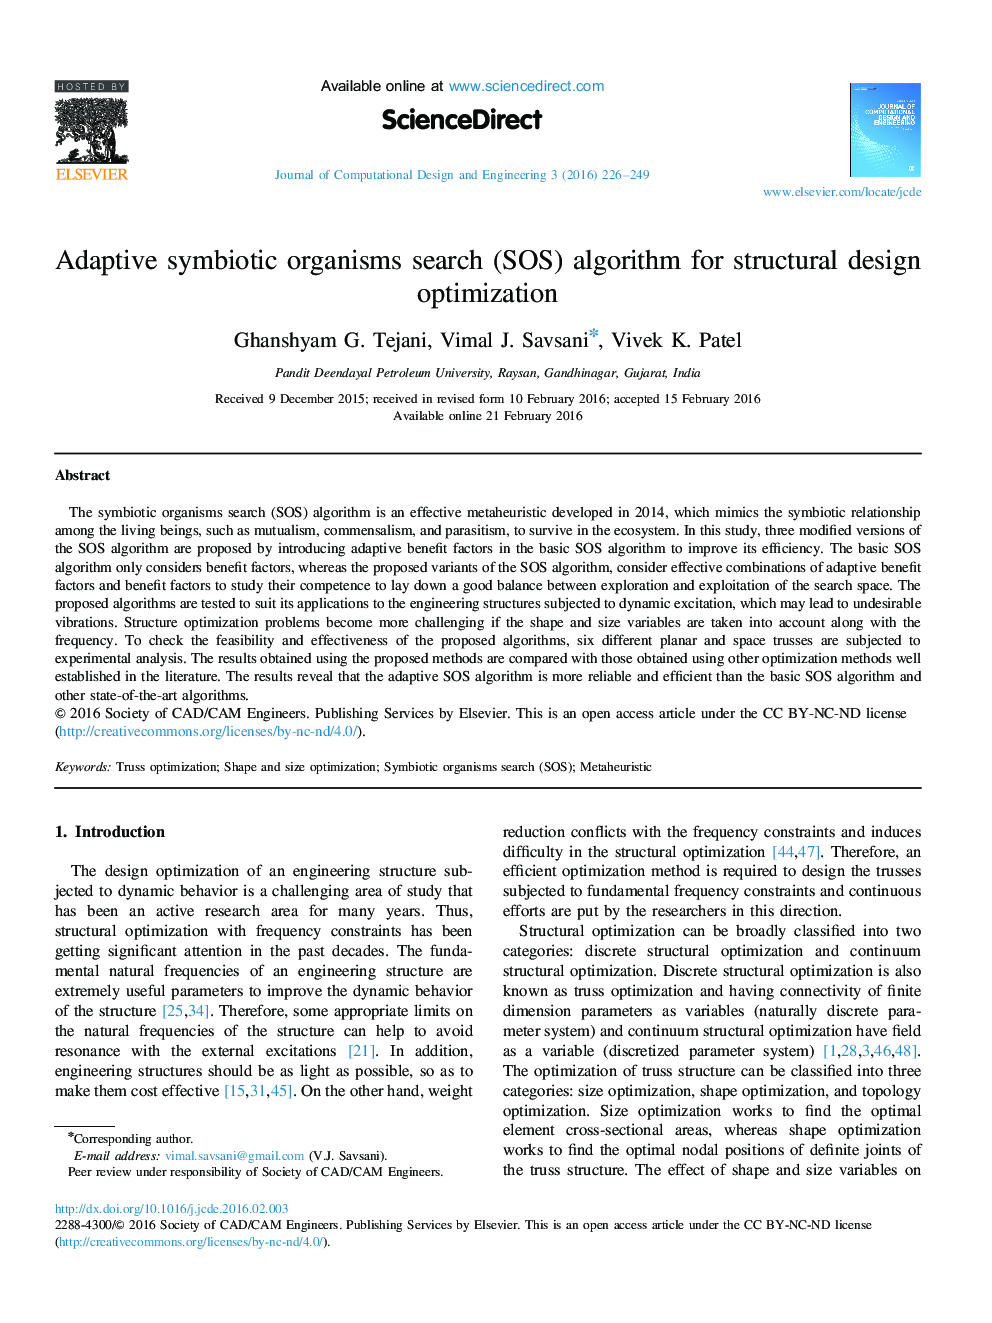 Adaptive symbiotic organisms search (SOS) algorithm for structural design optimization 